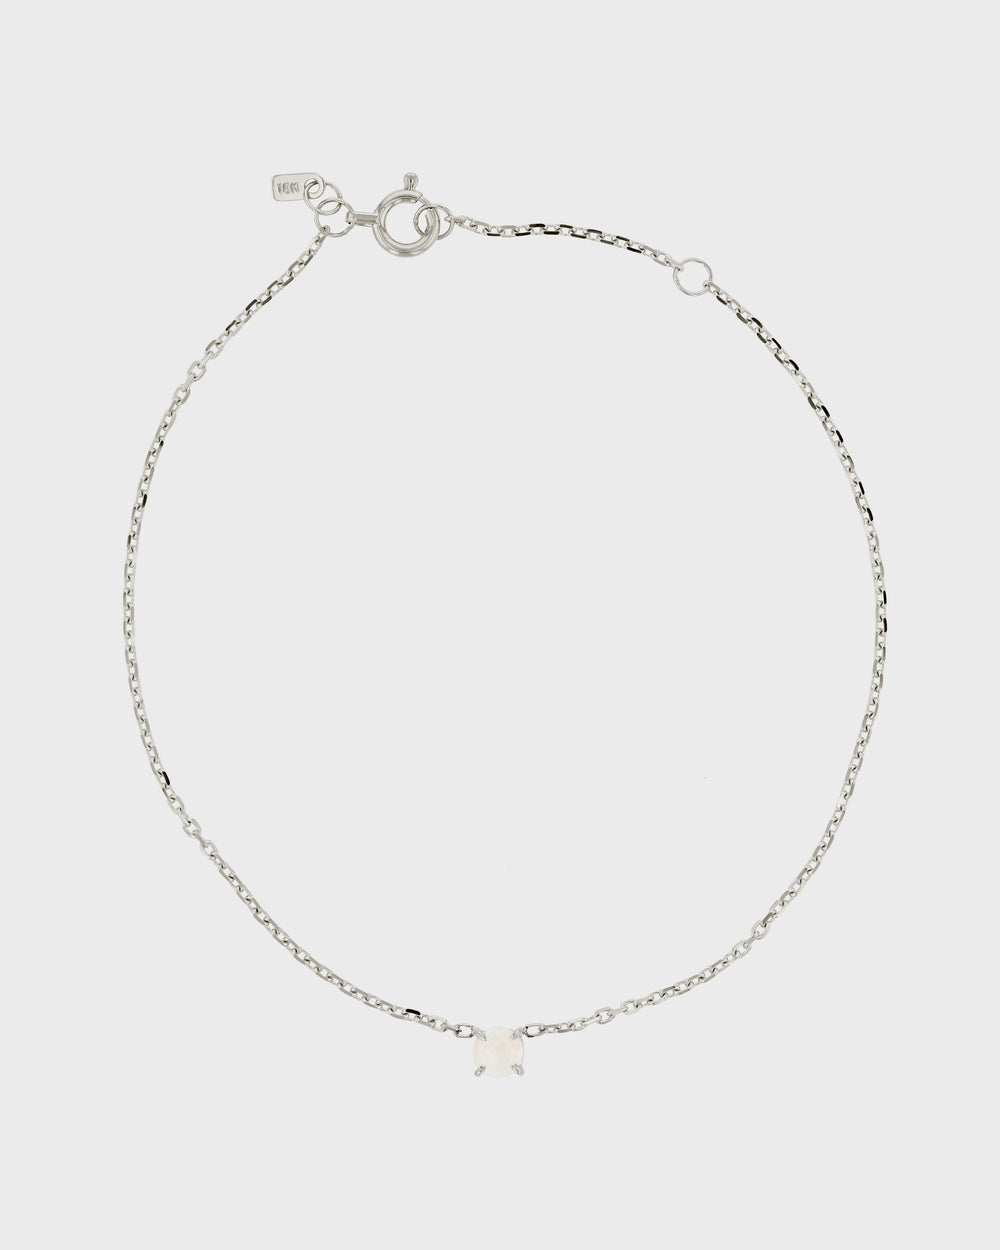 The Opal Birthstone Bracelet